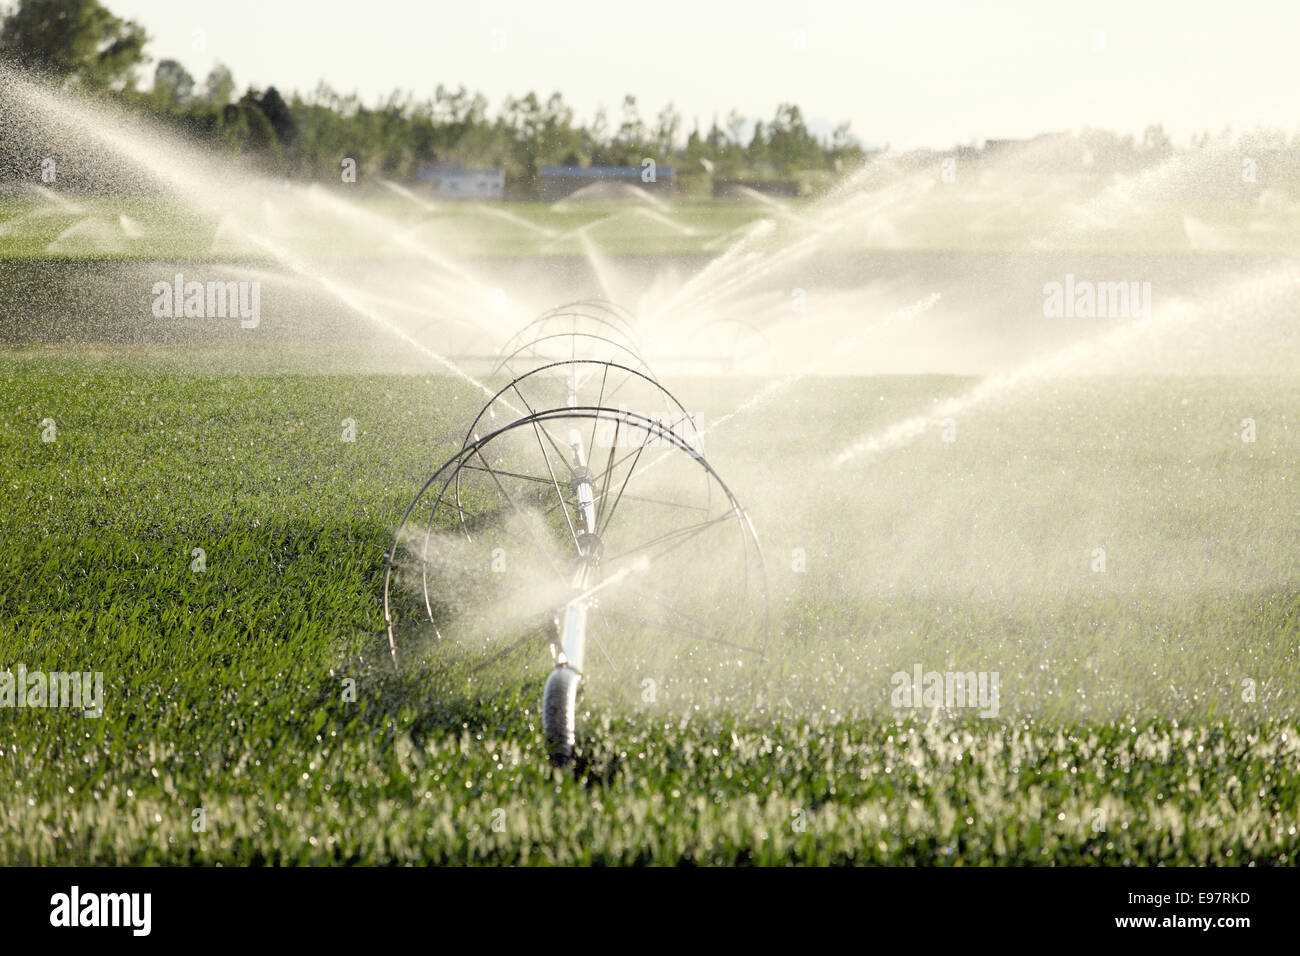 Farm irrigation using a wheel line sprinkler system Stock Photo